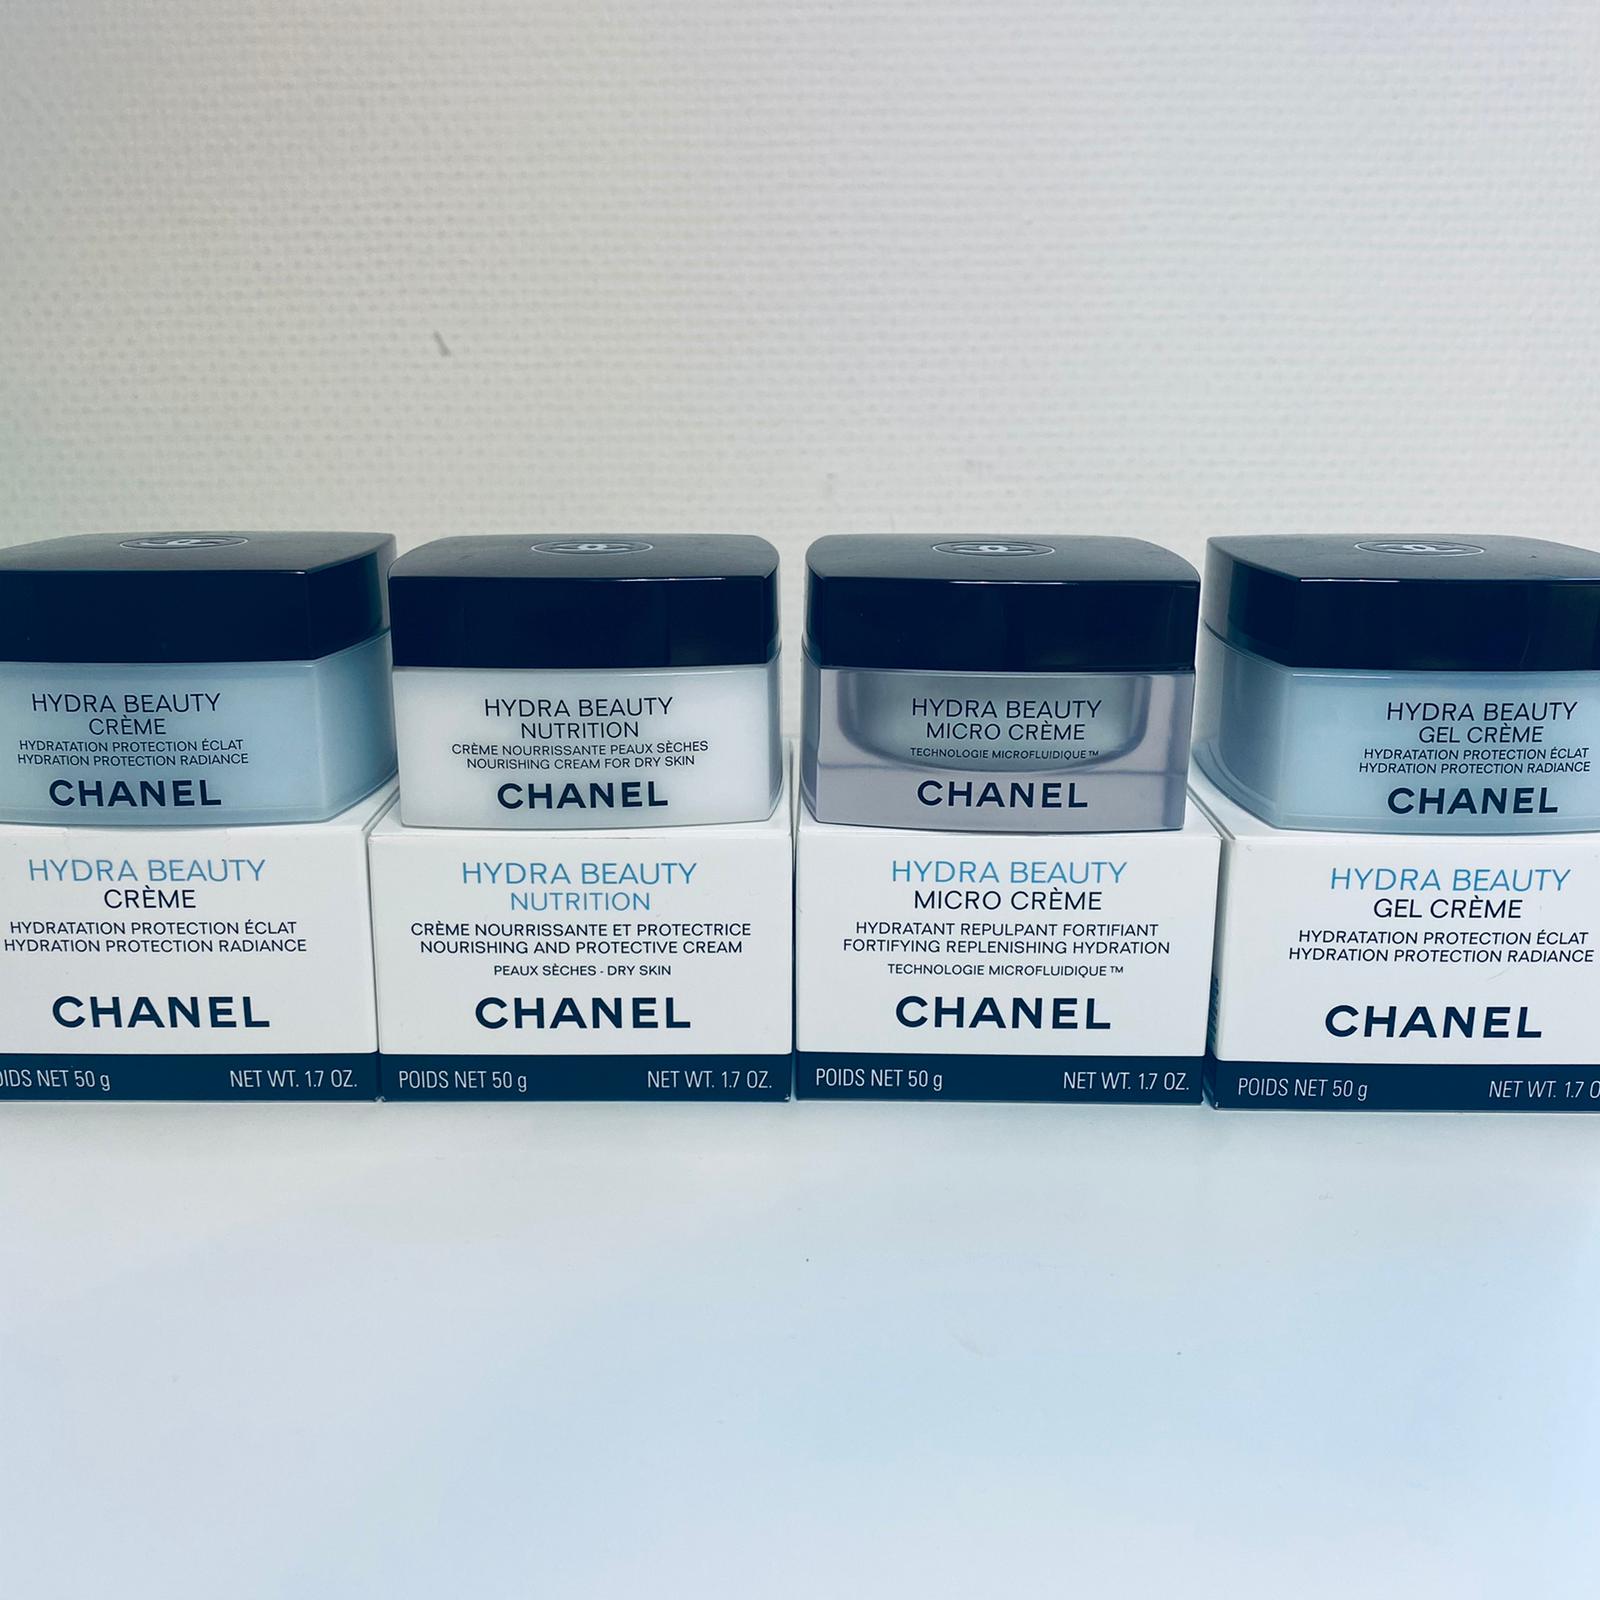 Chanel hydra beauty gel creme 50 g